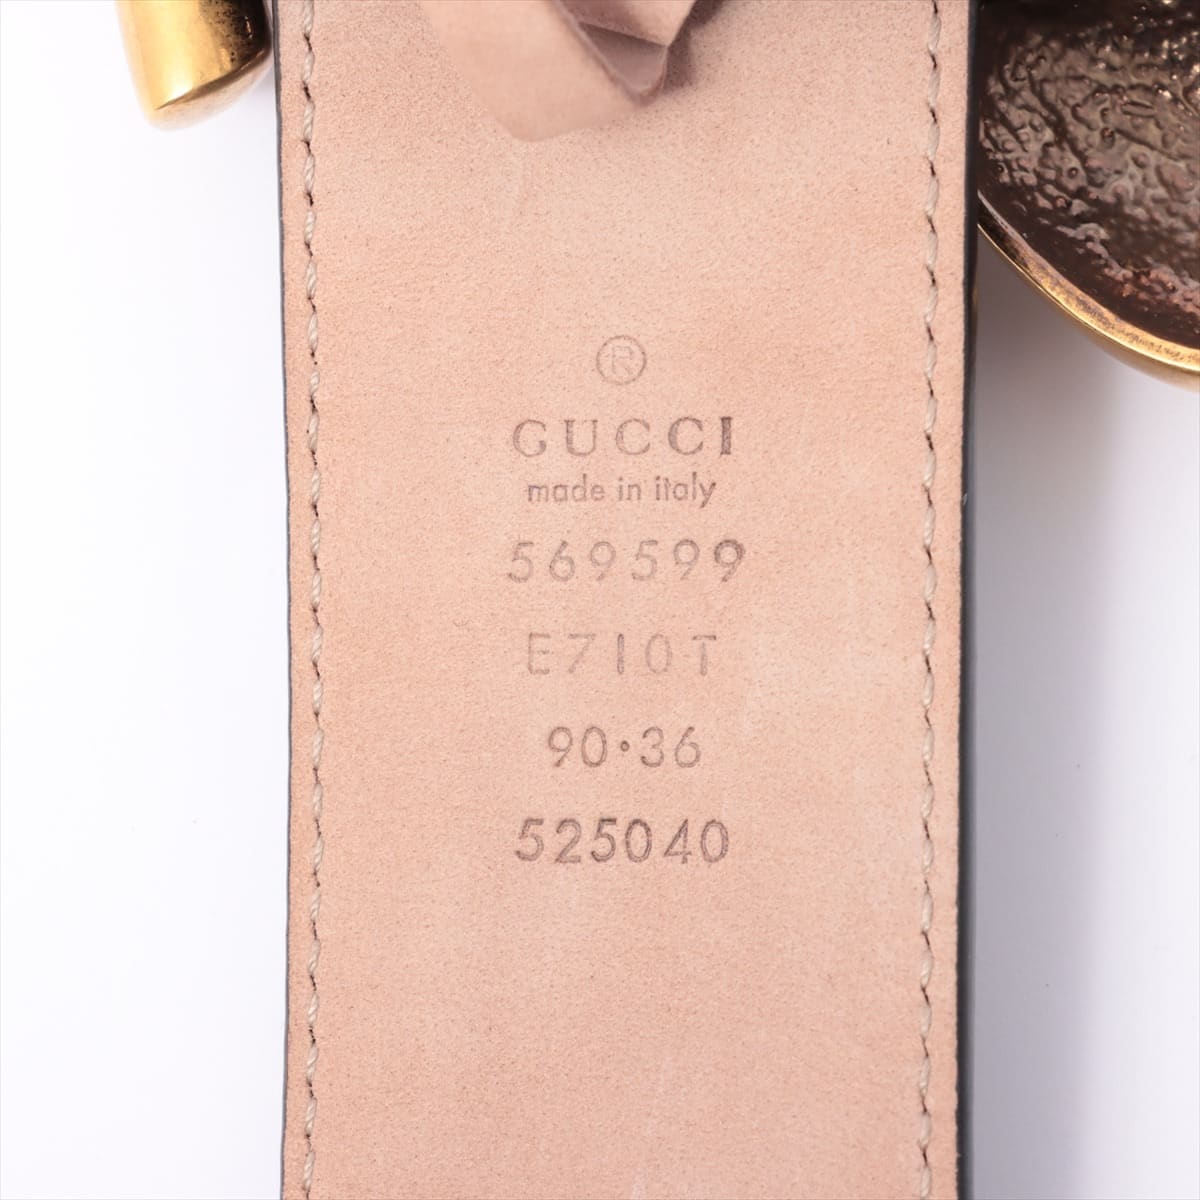 Gucci 569599 Belt 90/36 Crocodile x Leather Black